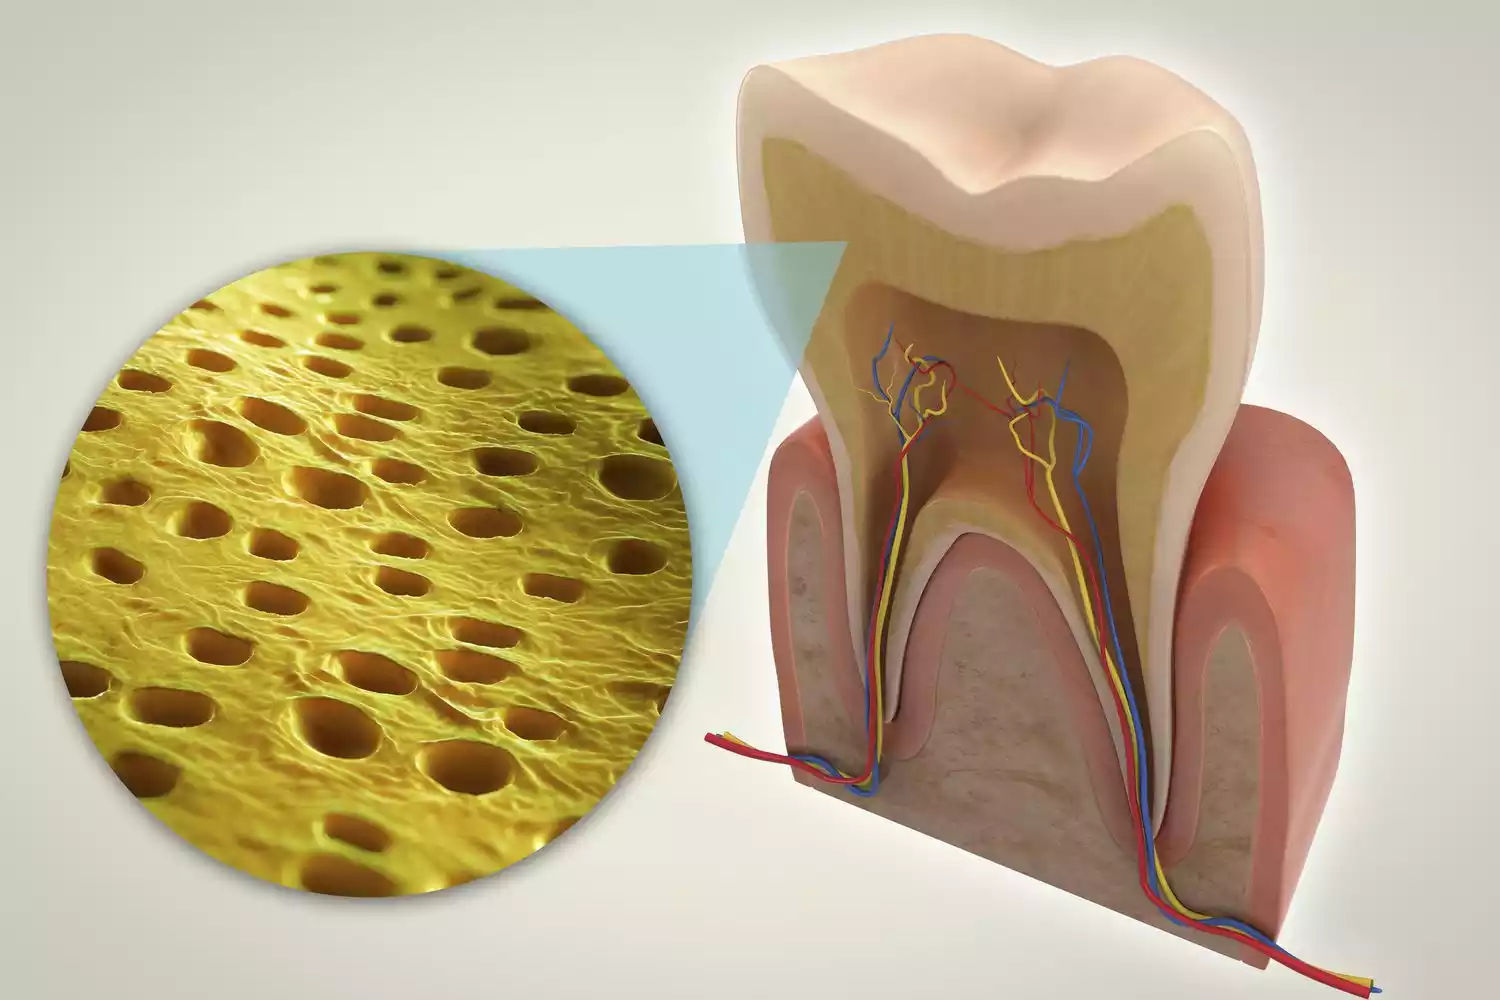 Importance of dentin in dental health